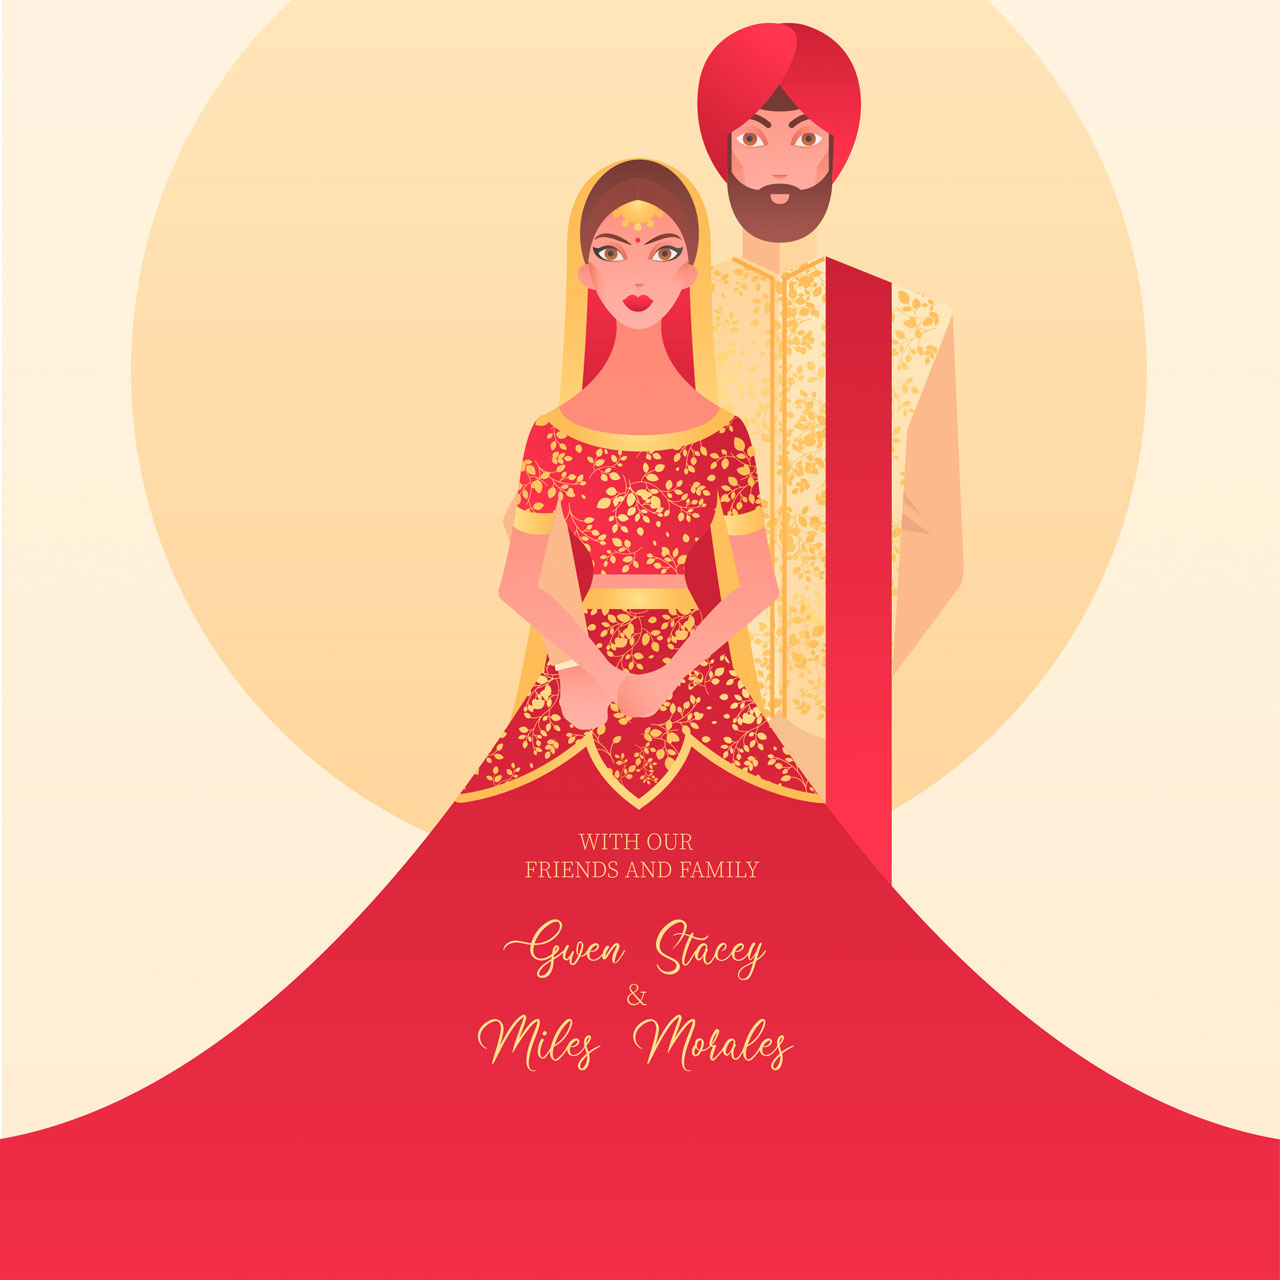 Indian wedding invitation with characters cartoon illustration image